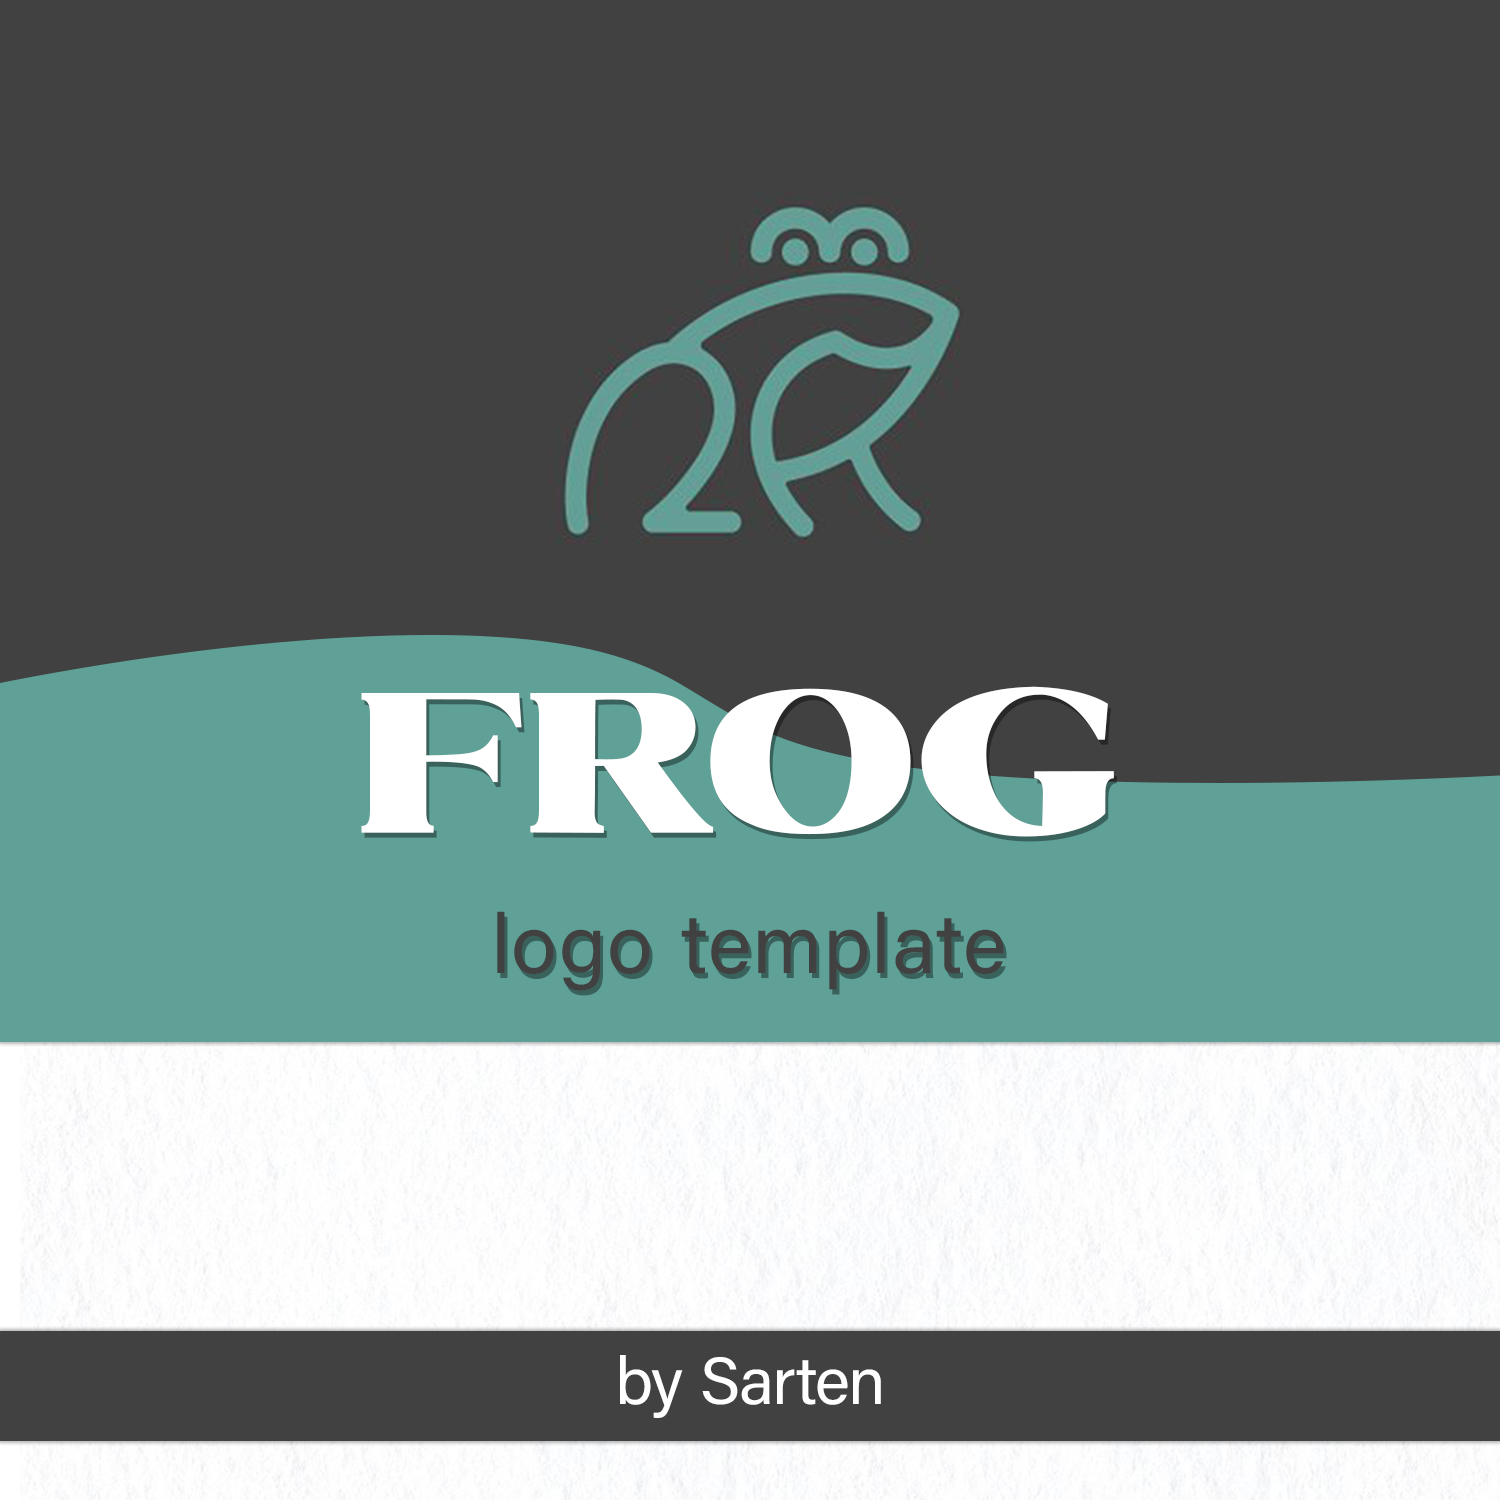 Frog logo template.